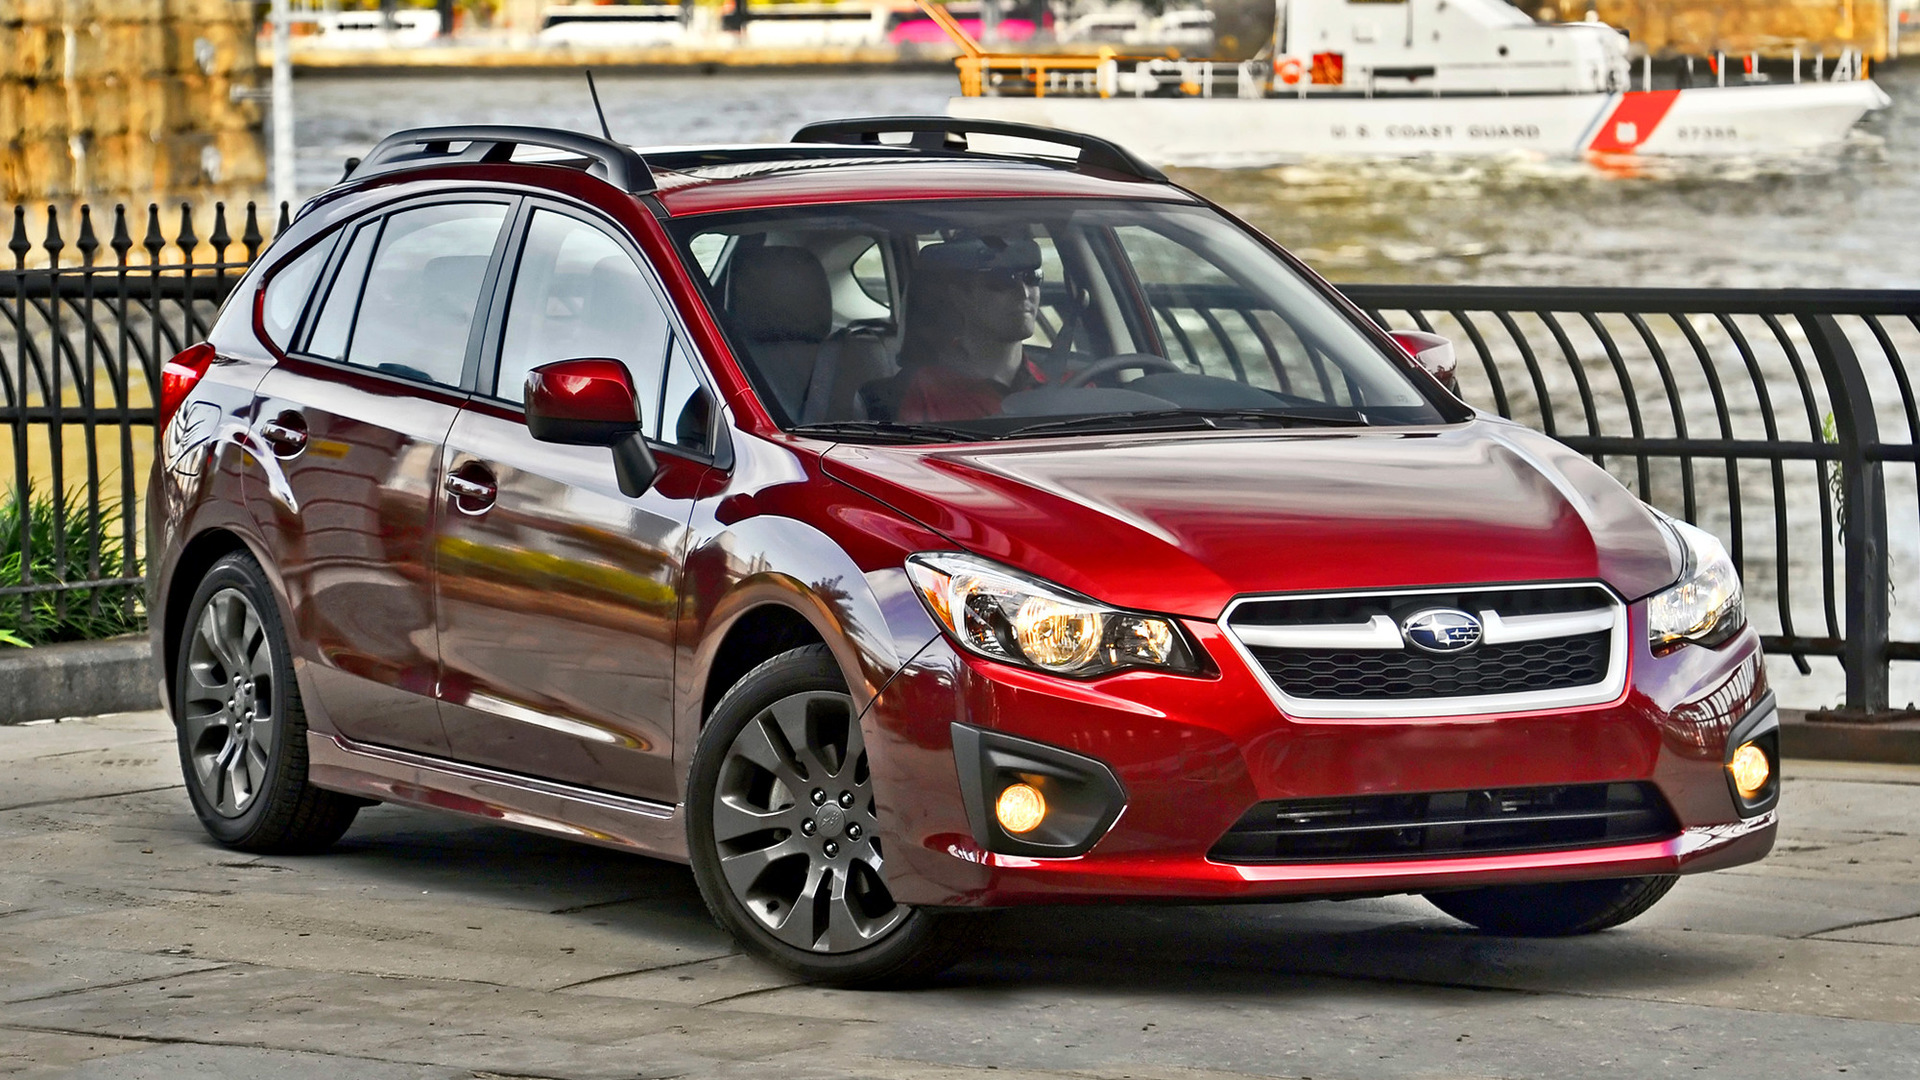 2011 Subaru Impreza Sport Hatchback (US) Wallpapers and